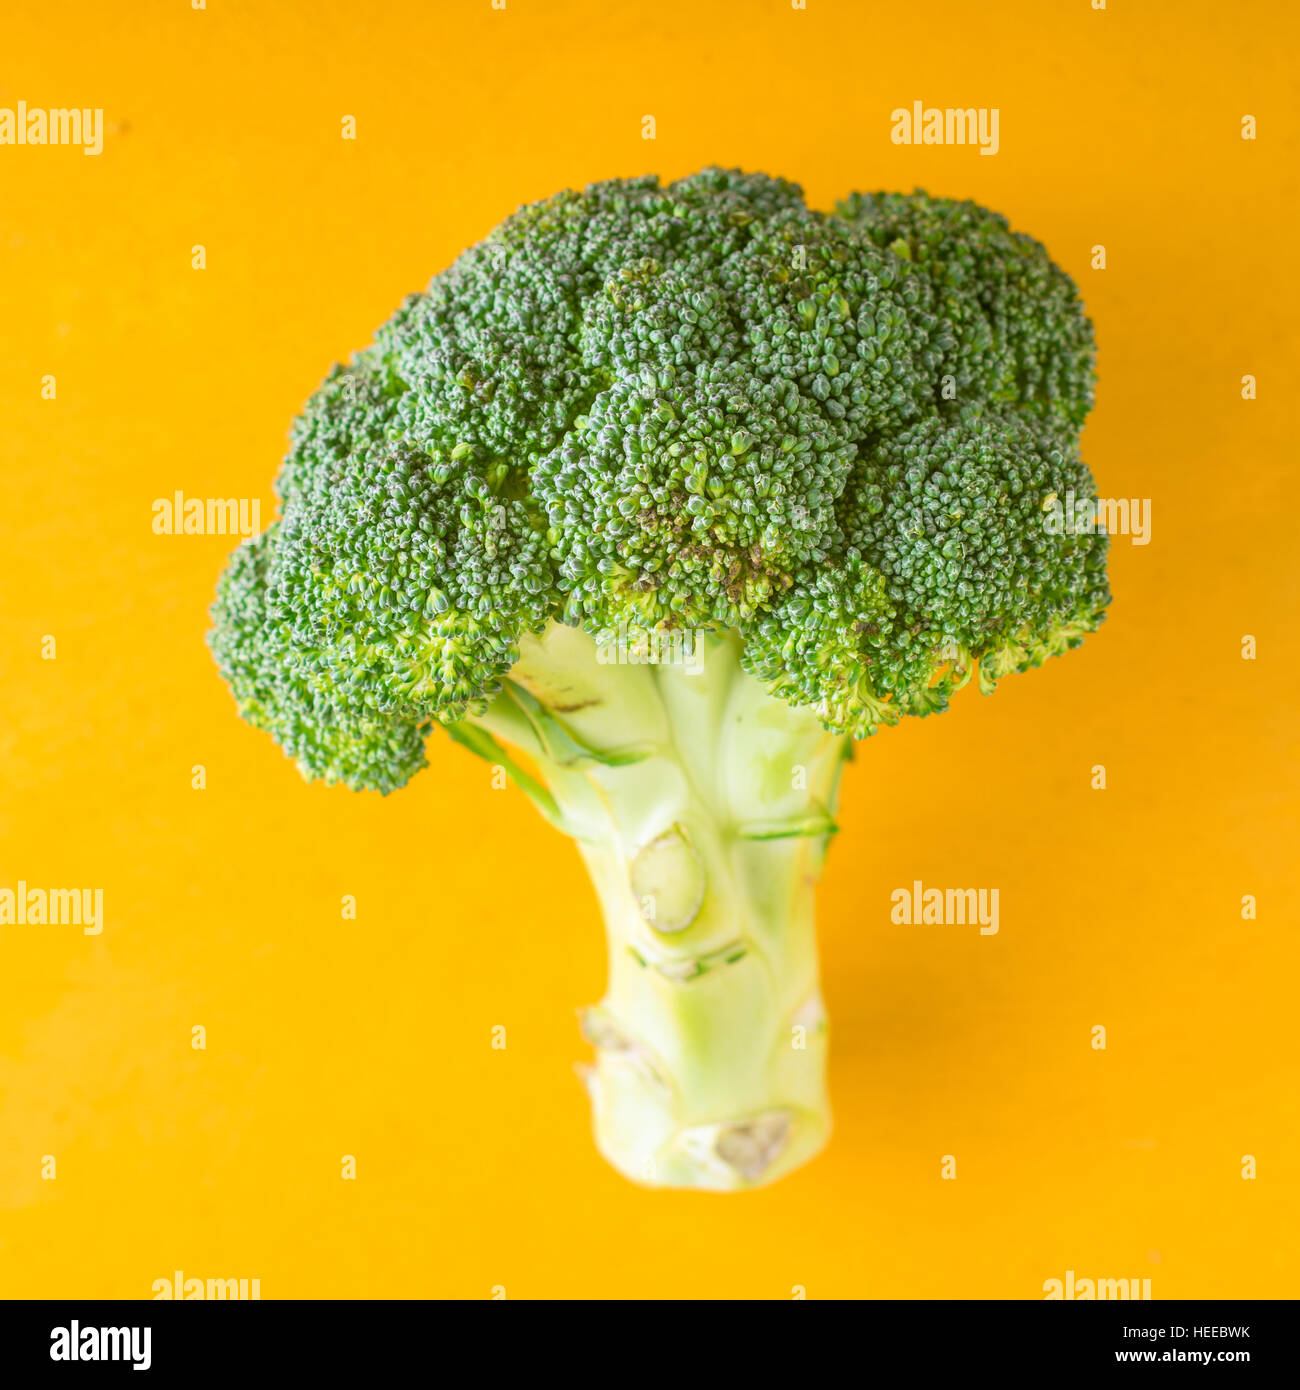 Farmer broccoli on a yellow background square Stock Photo